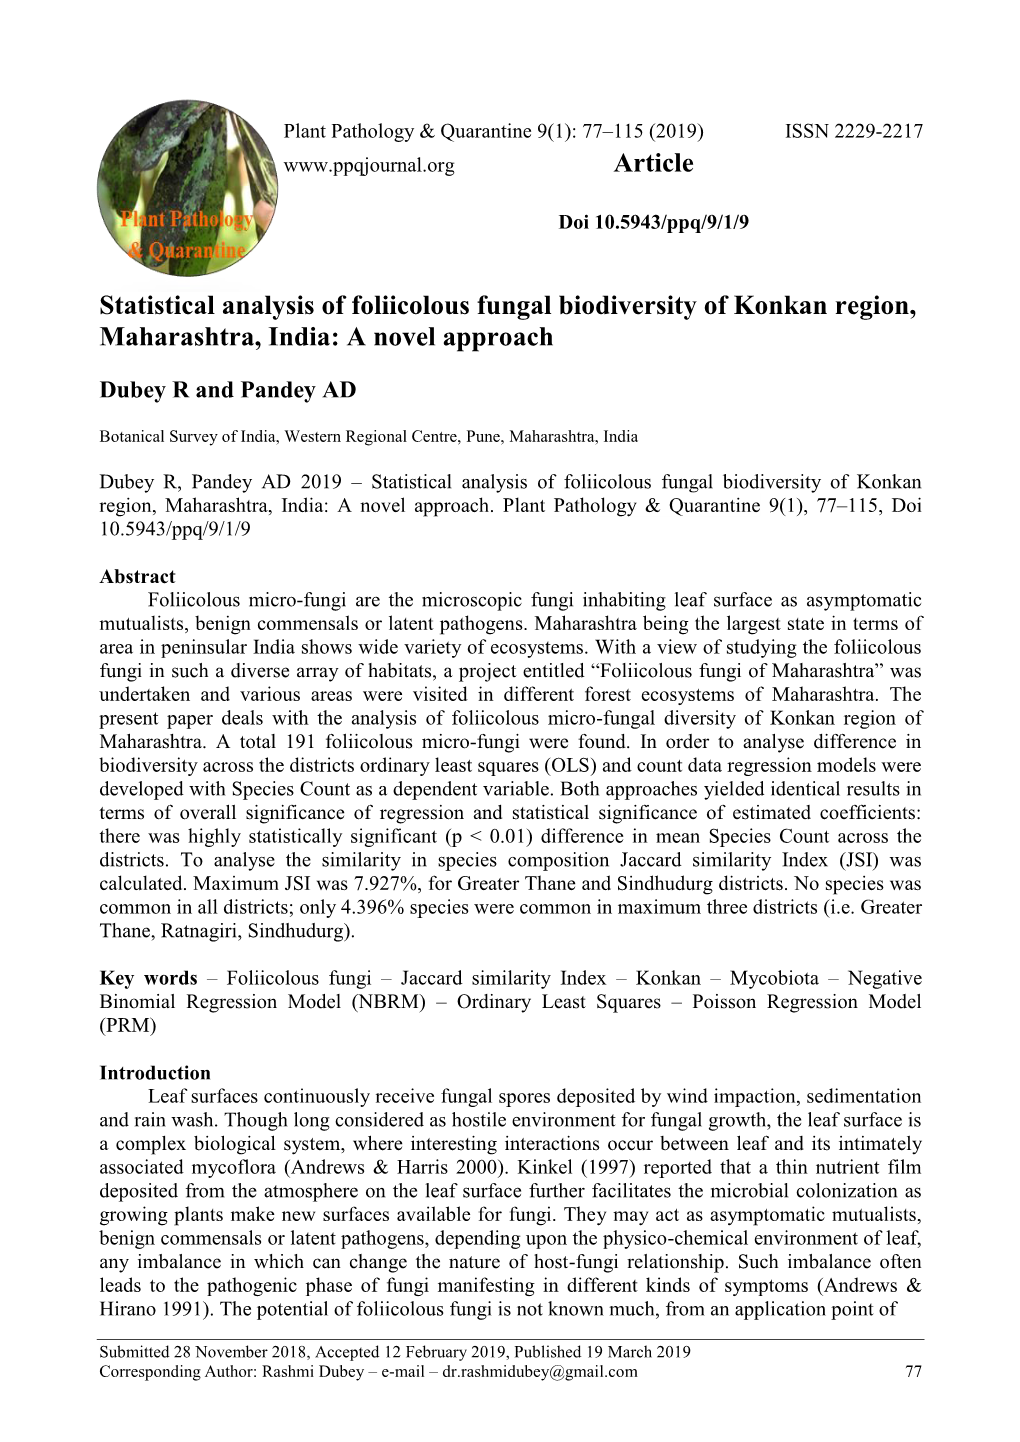 Statistical Analysis of Foliicolous Fungal Biodiversity of Konkan Region, Maharashtra, India: a Novel Approach